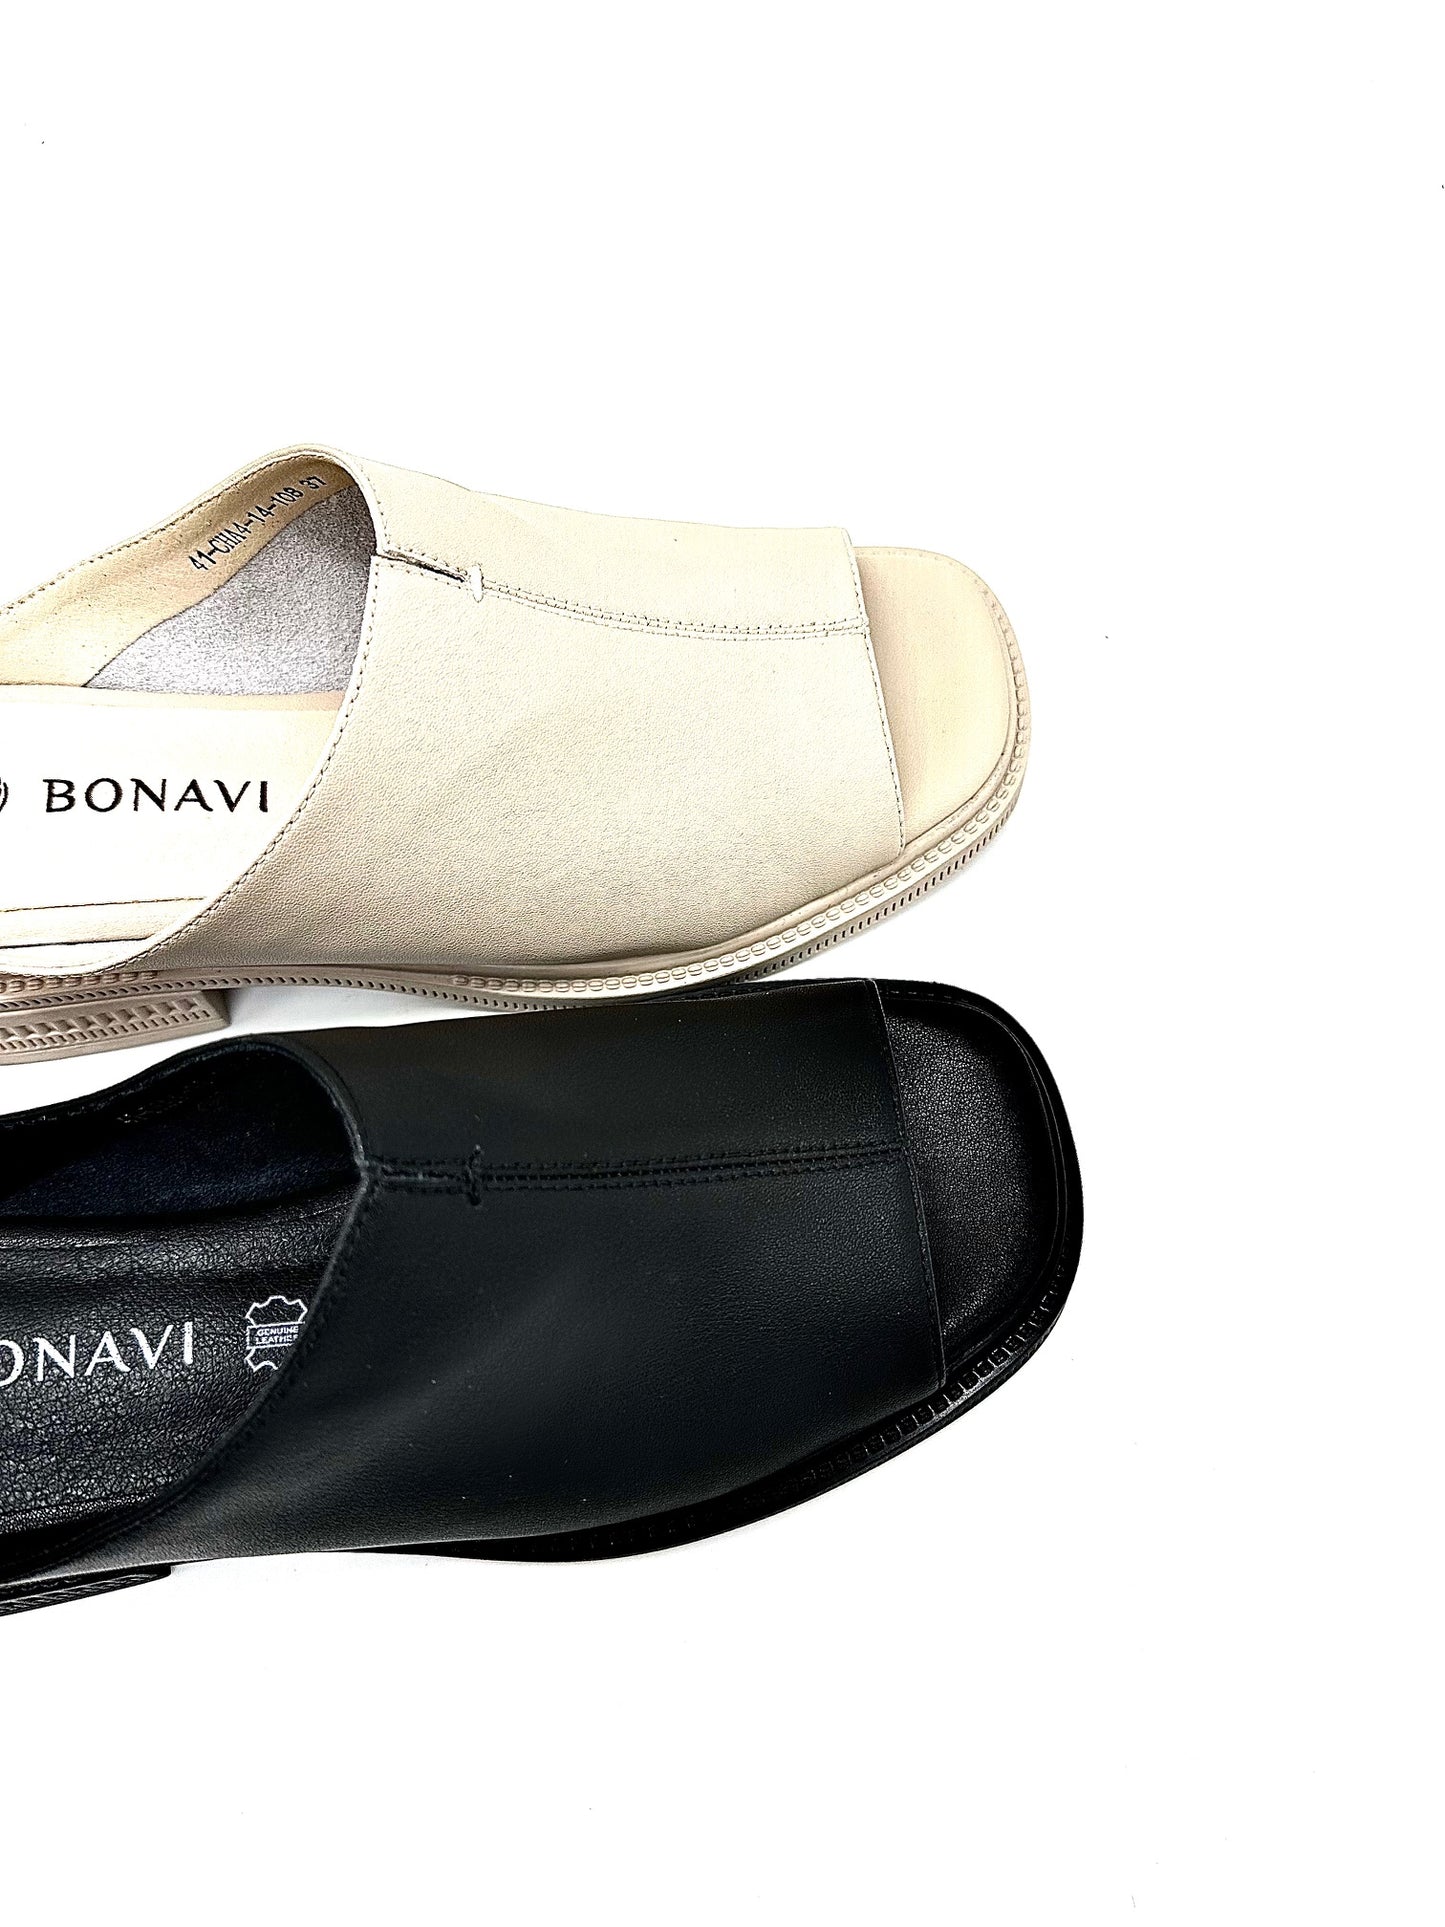 CHA-14 Bonavi Comfort Sandal